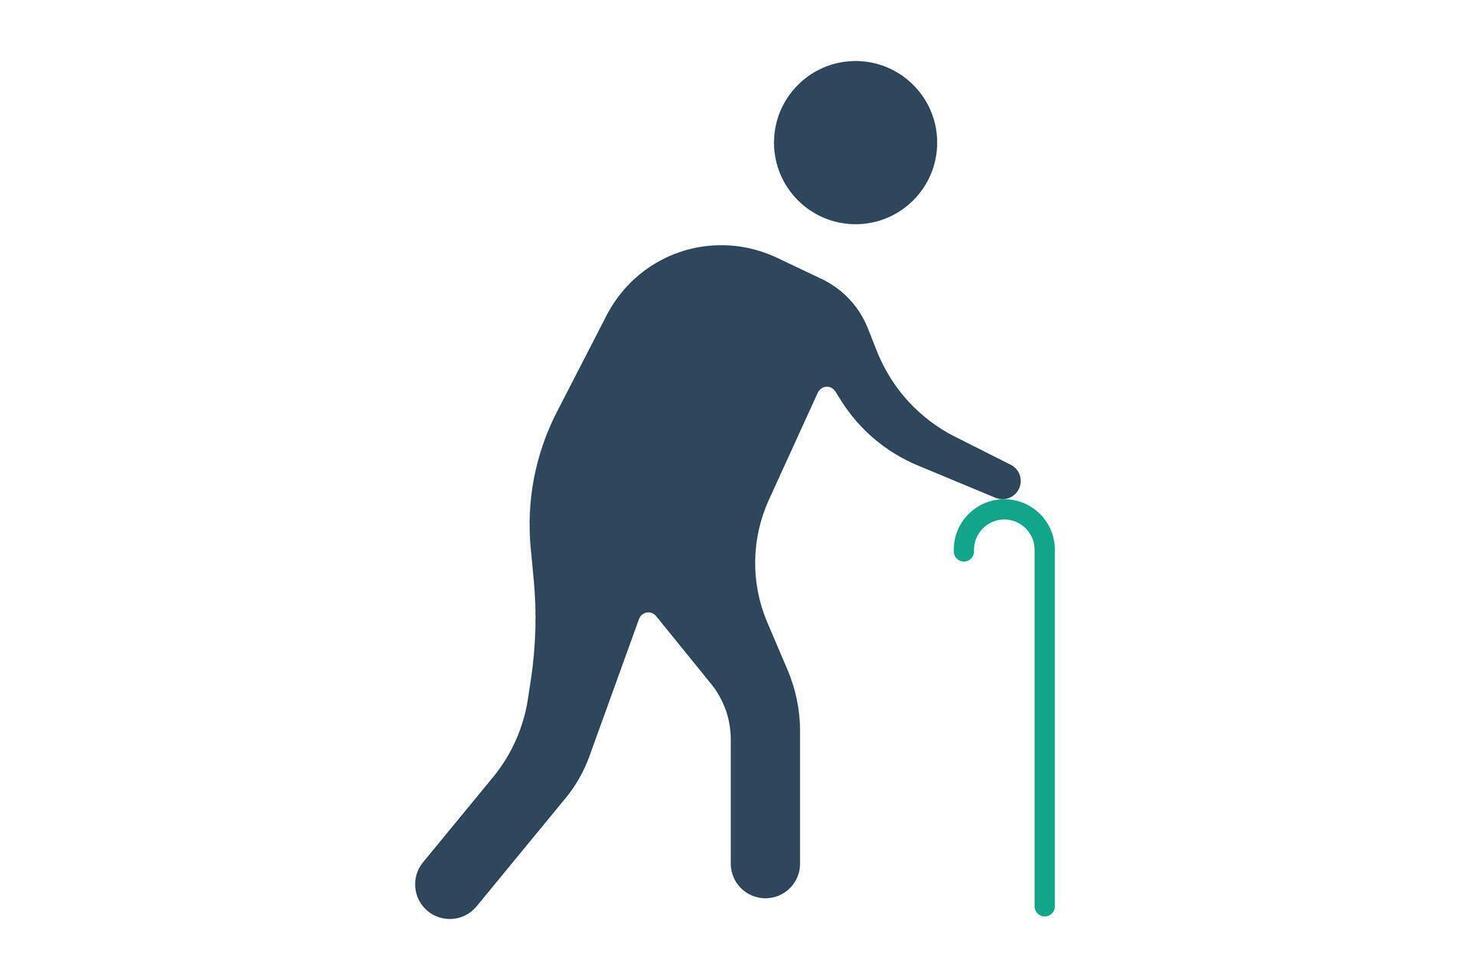 elderly icon. elderly people use walking sticks. solid icon style. old age element illustration vector